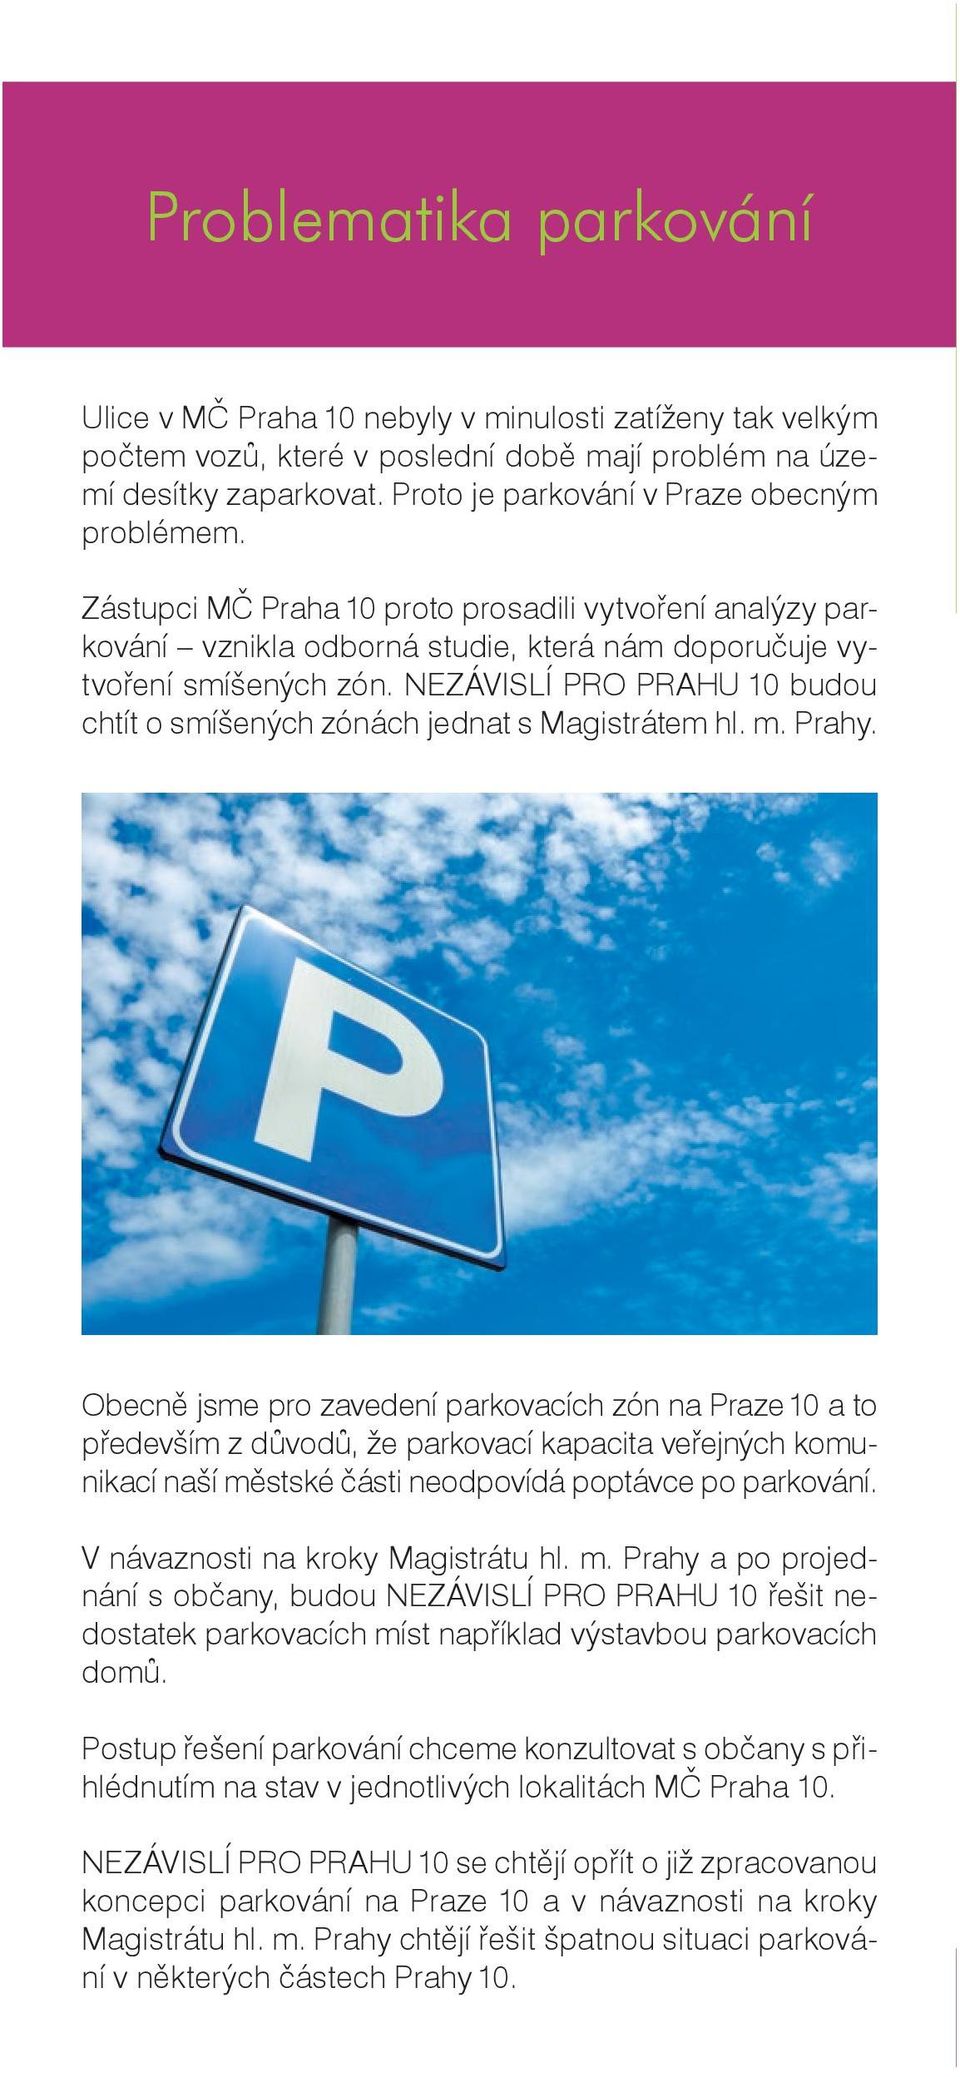 NEZÁVISLÍ PRO PRAHU 10 budou chtít o smíšených zónách jednat s Magistrátem hl. m. Prahy.